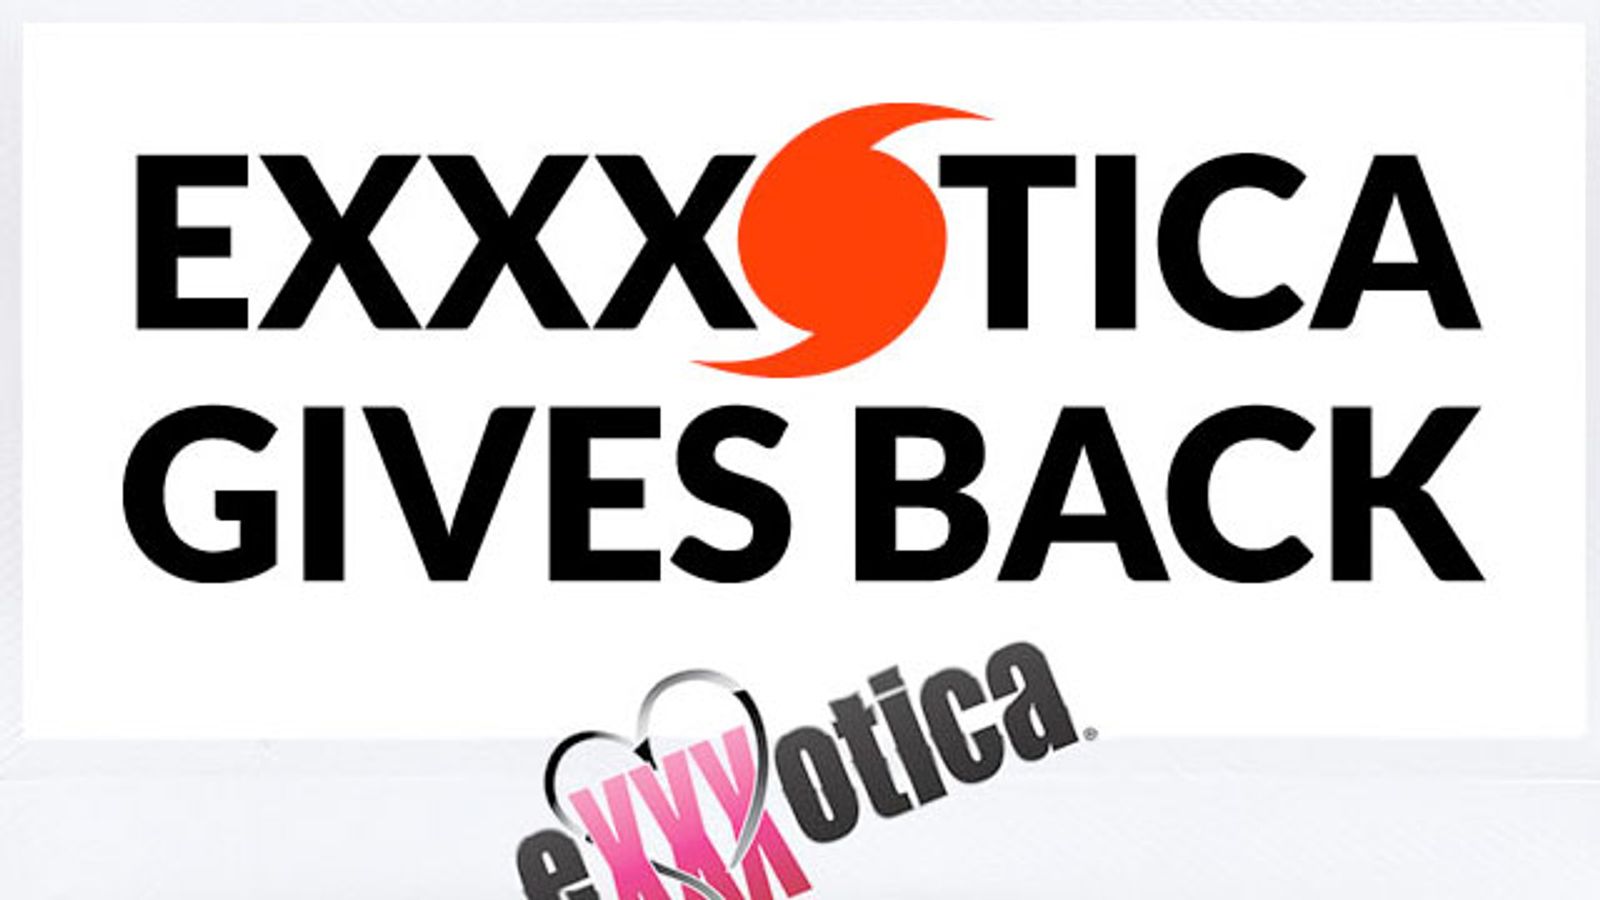 Exxxotica Gives Back, Raising Dollars and Spirits